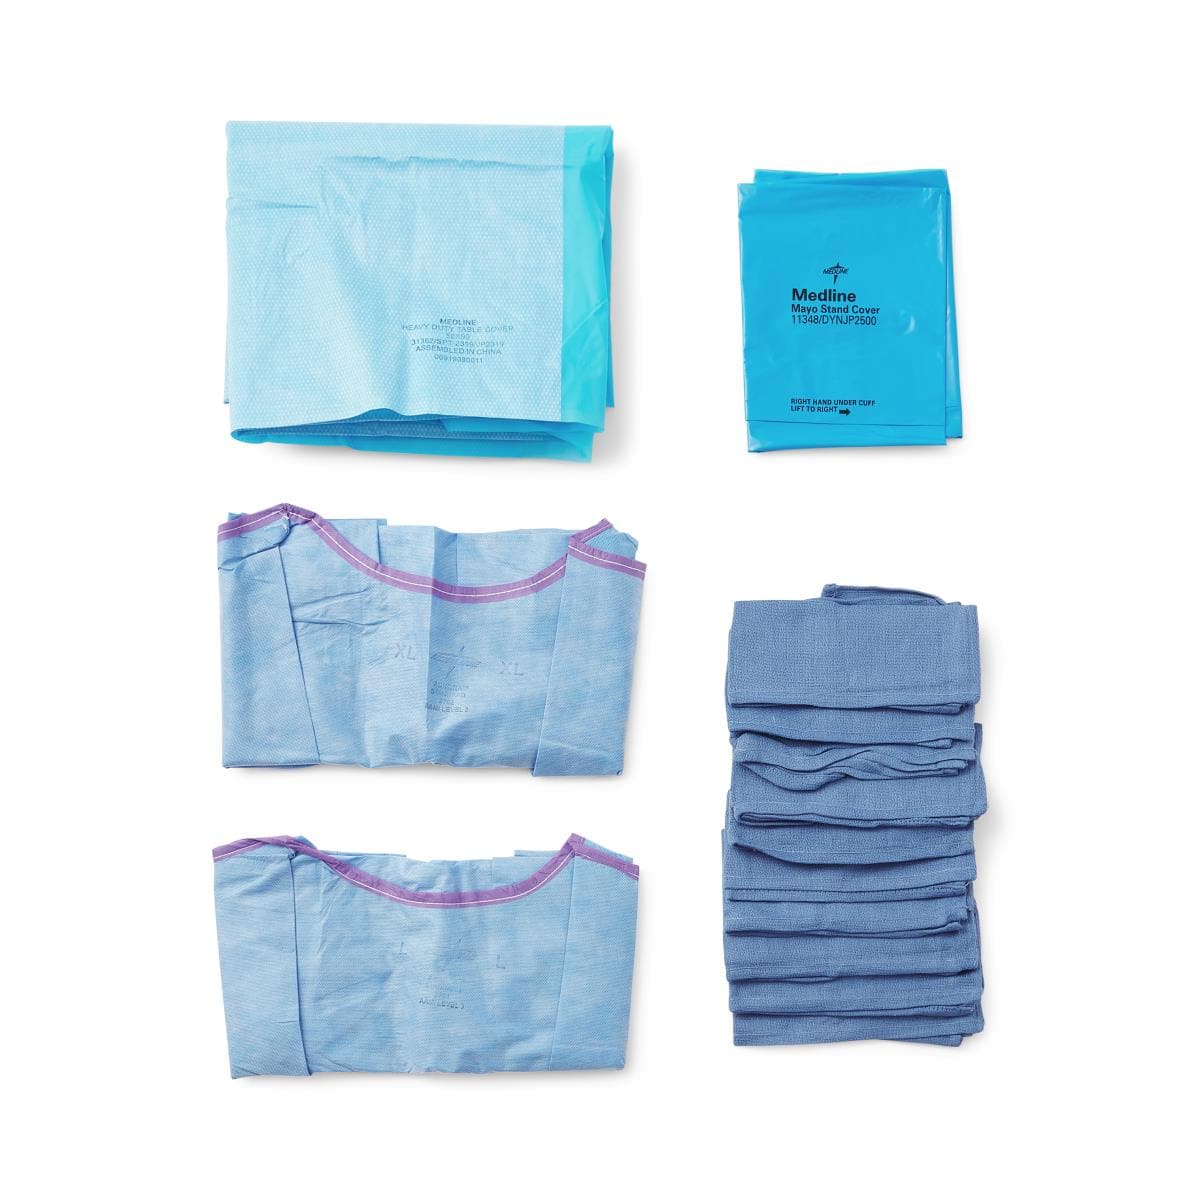 Medline Medline Aurora Surgical Set-Up Pack with Drapes and Gowns DYNJP1047